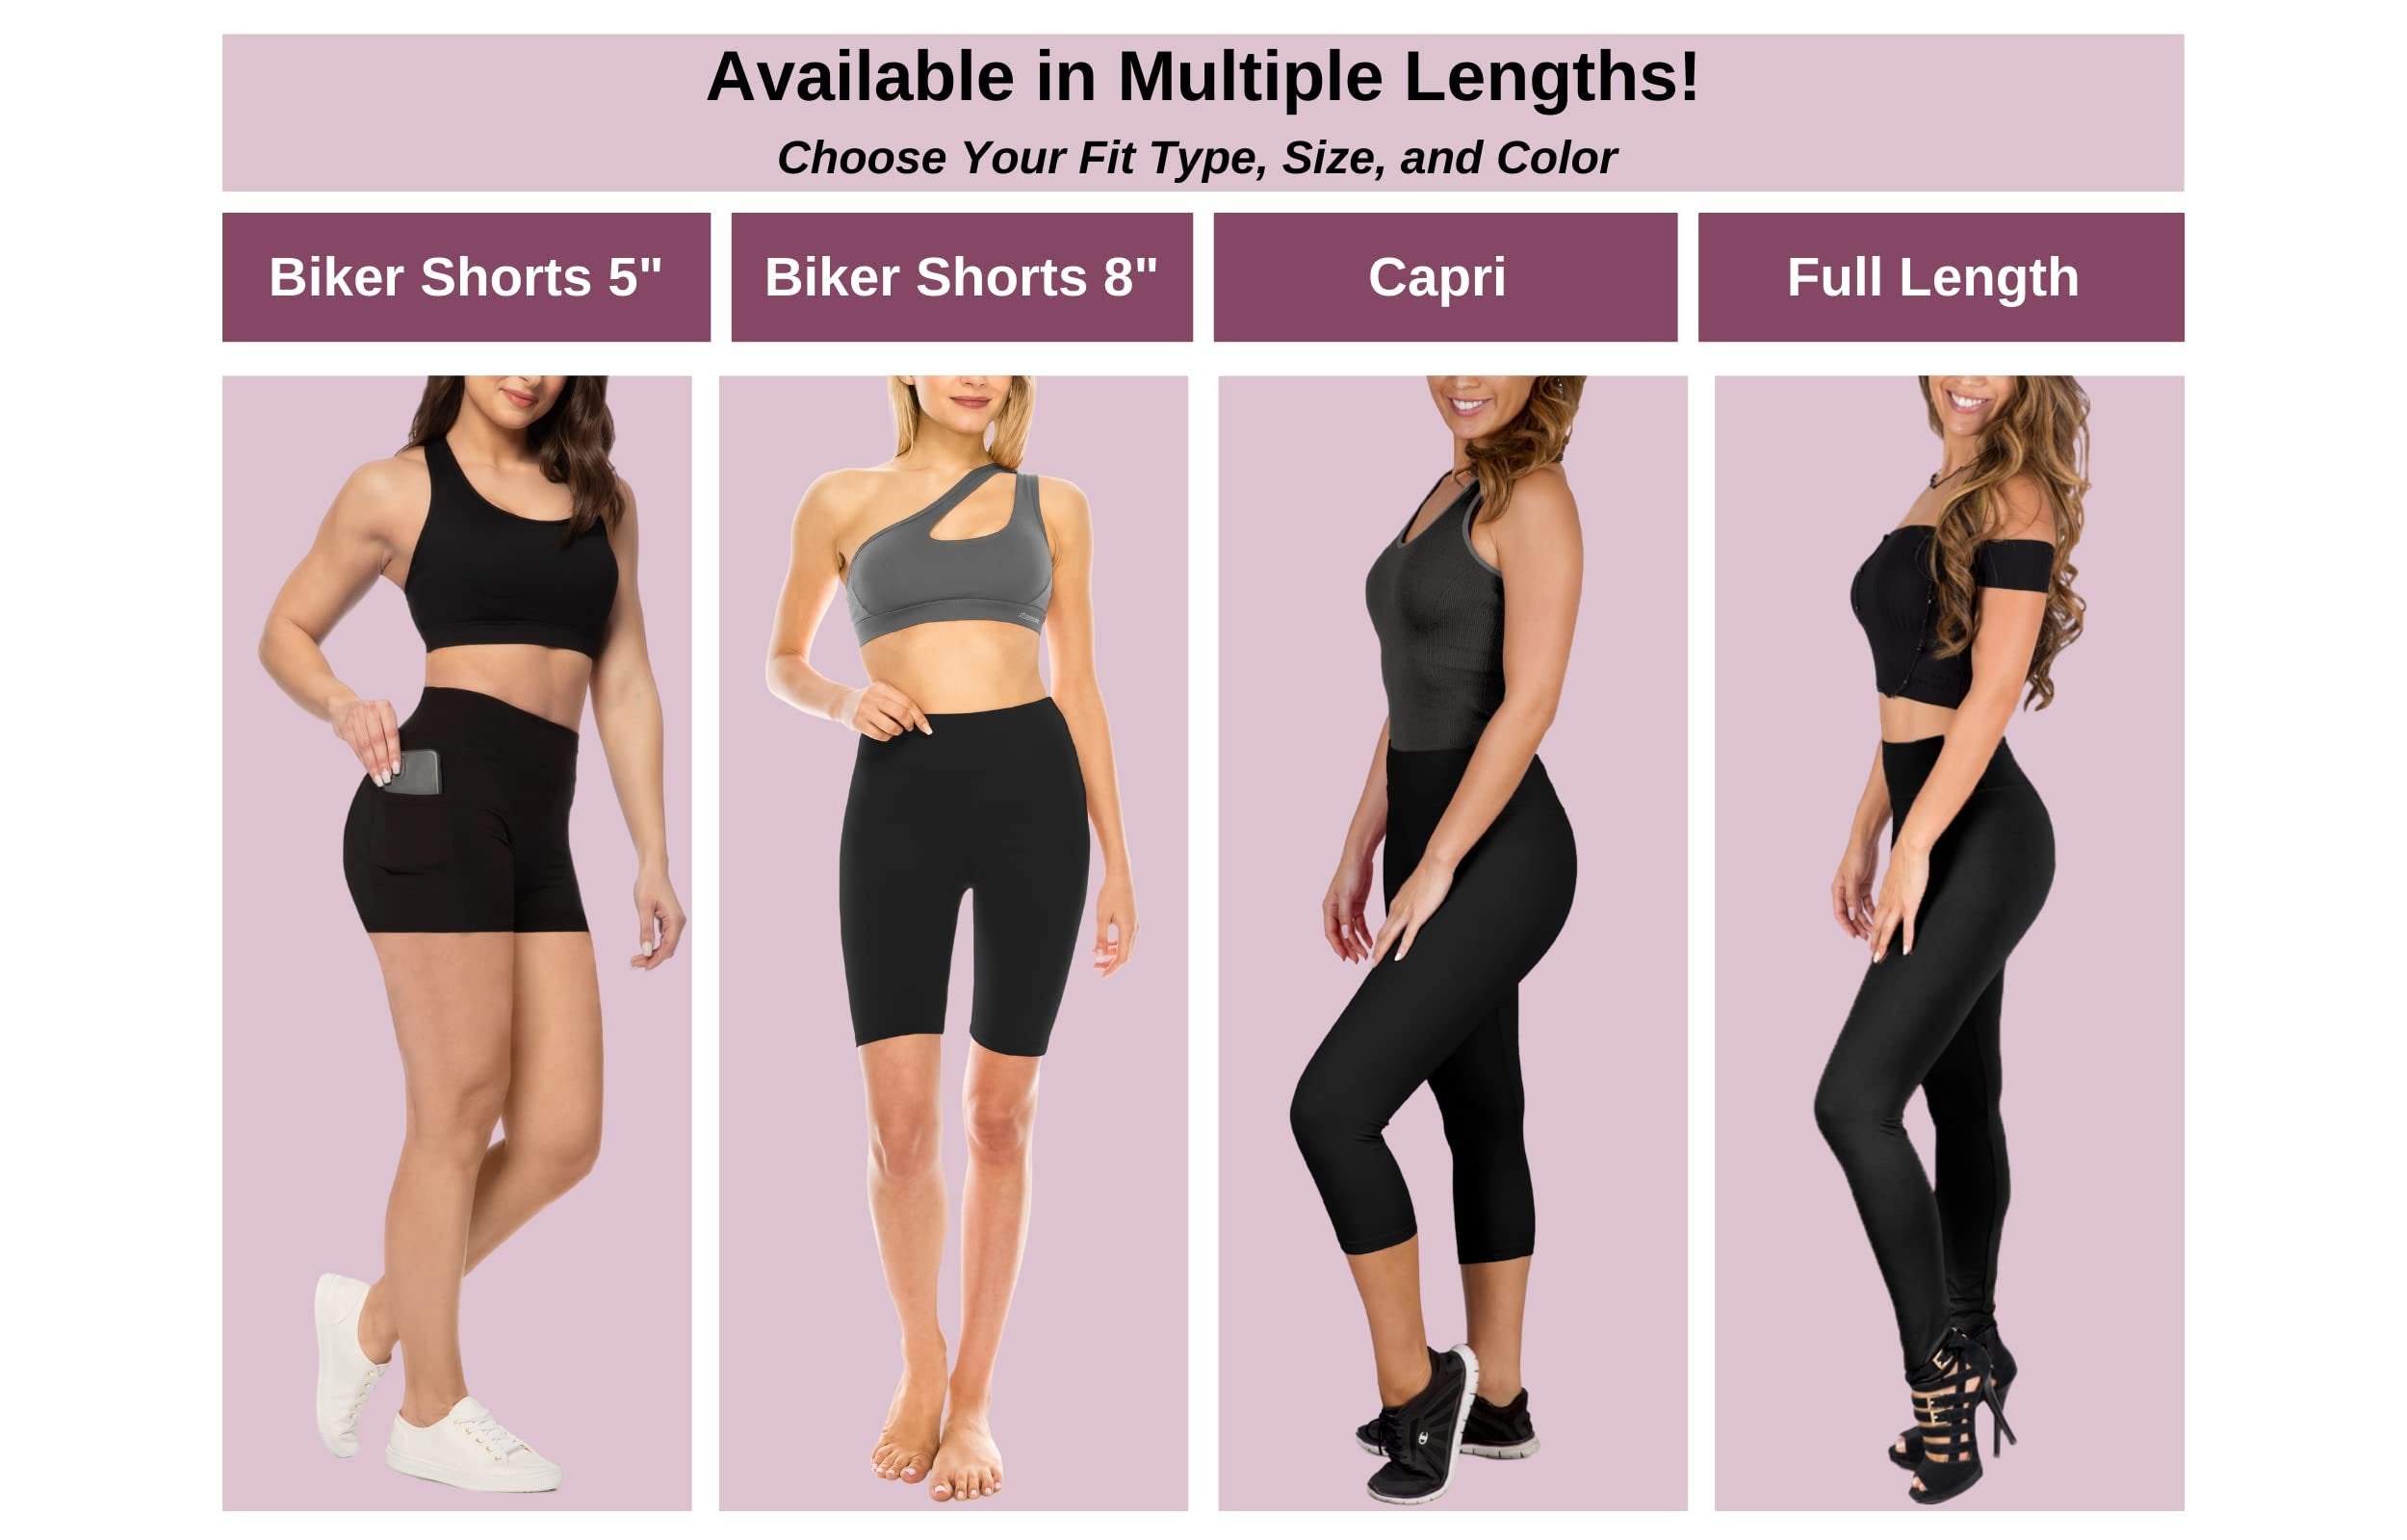 SATINA High Waisted Capri Leggings for Women - Capri Pants for Women - High Waist for Tummy Control - Fuchsia Capri Leggings for Yoga |3 Inch Waistband (One Size, Fuchsia)